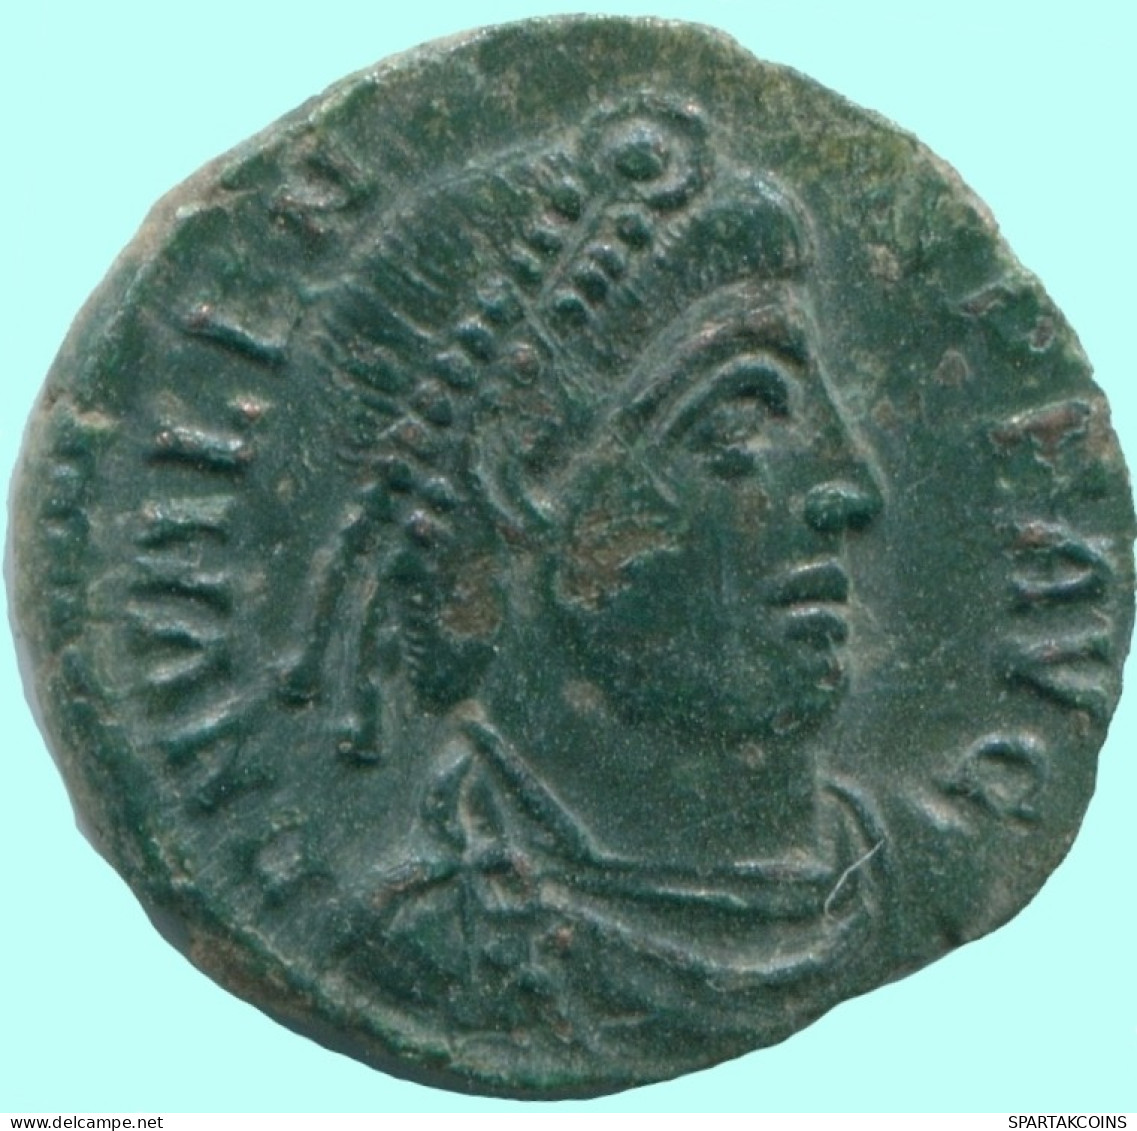 VALENTINIAN I SISCIA Mint AD 364/67 VICTORY ADVANCING 2.2g/17mm #ANC13067.17.E.A - El Bajo Imperio Romano (363 / 476)